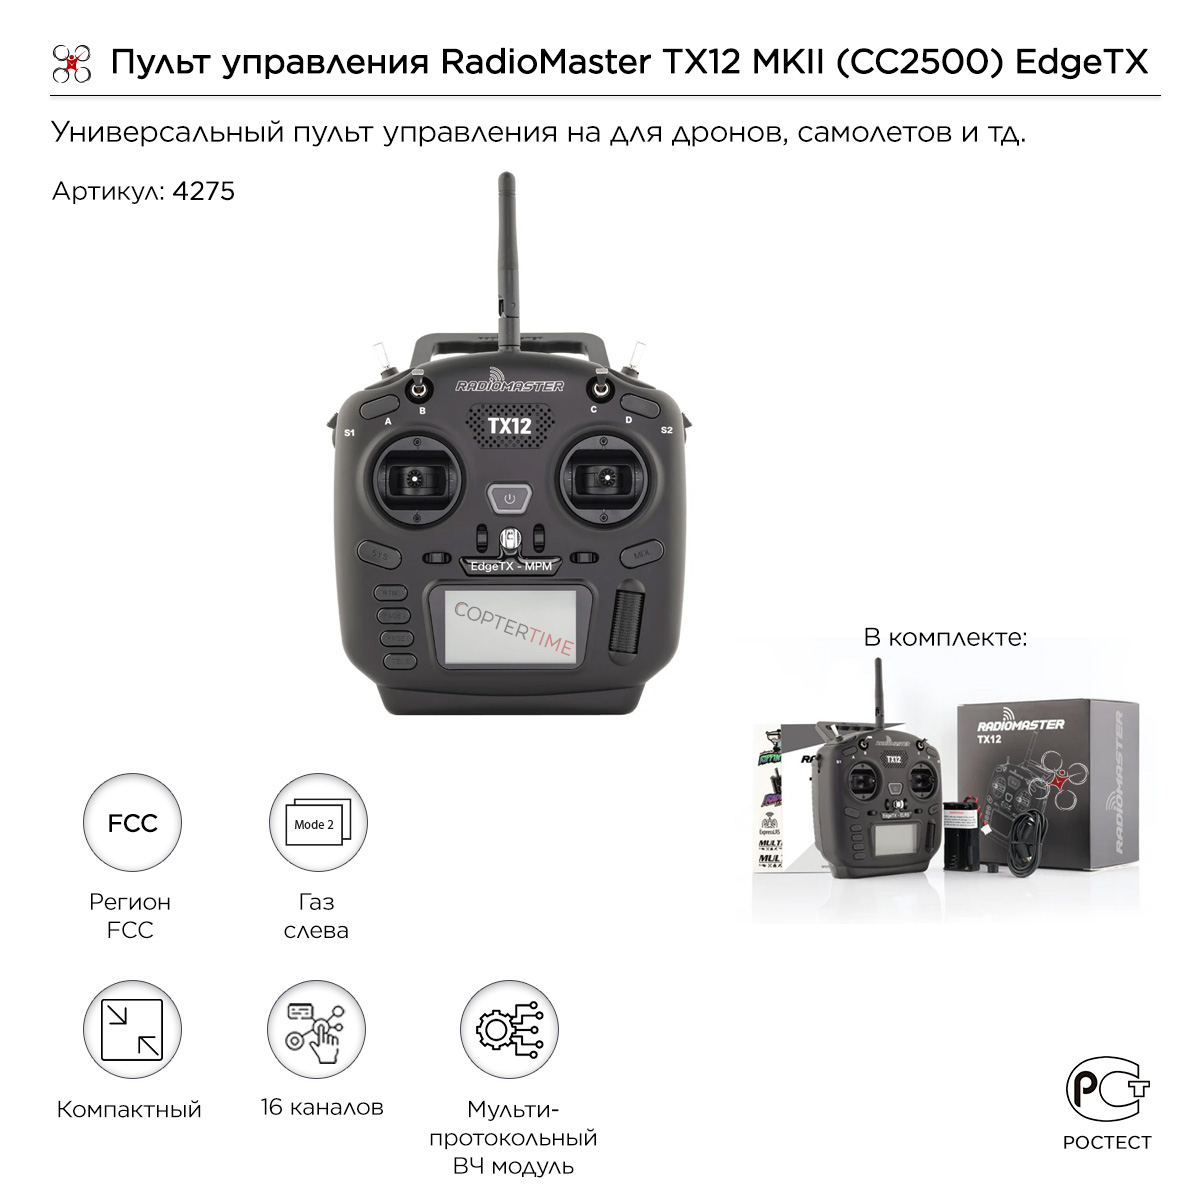 Аппаратура управления RadioMaster TX12 MKII (CC2500) EdgeTX